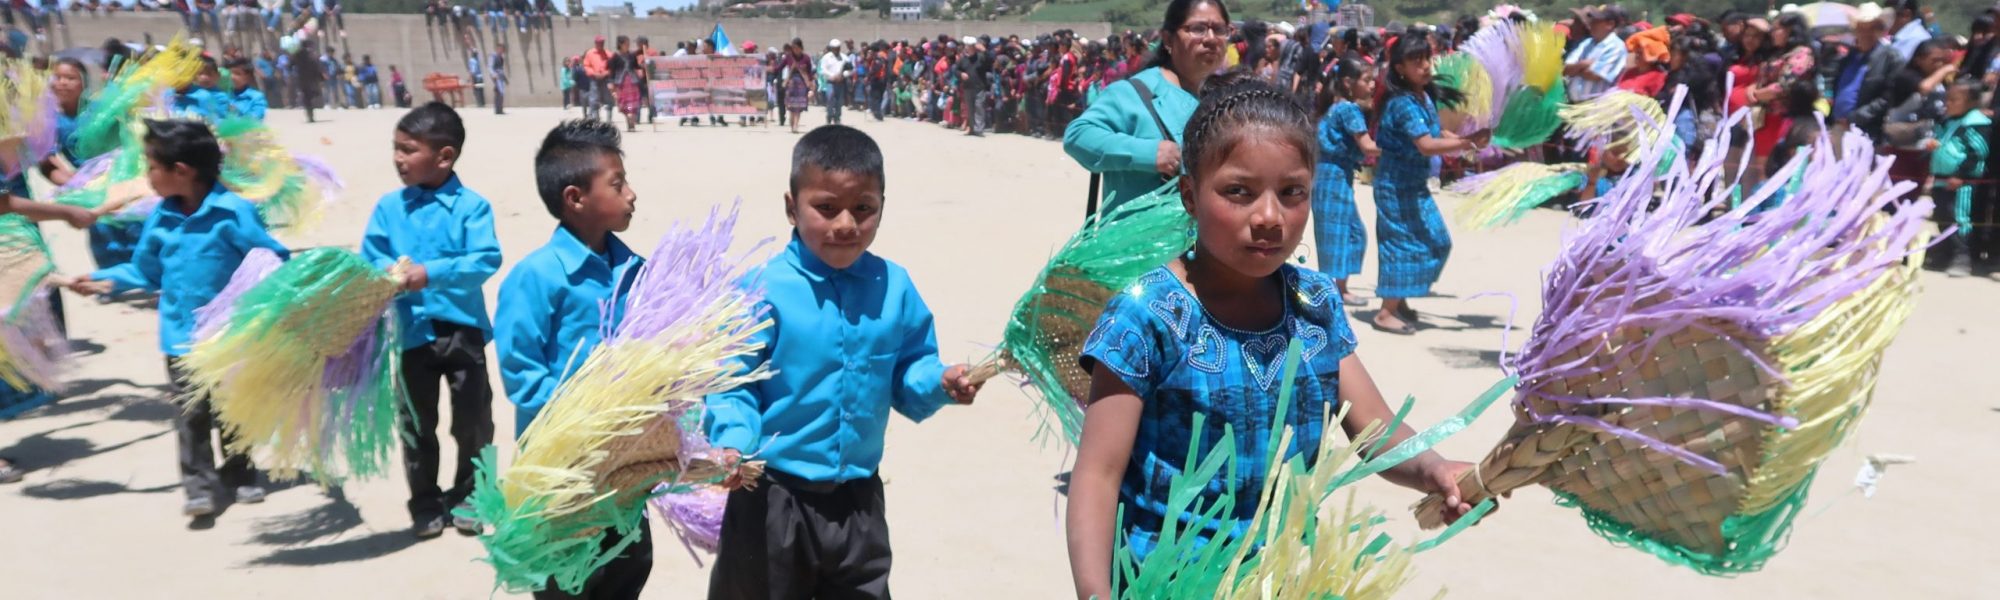 children holding colorful fans